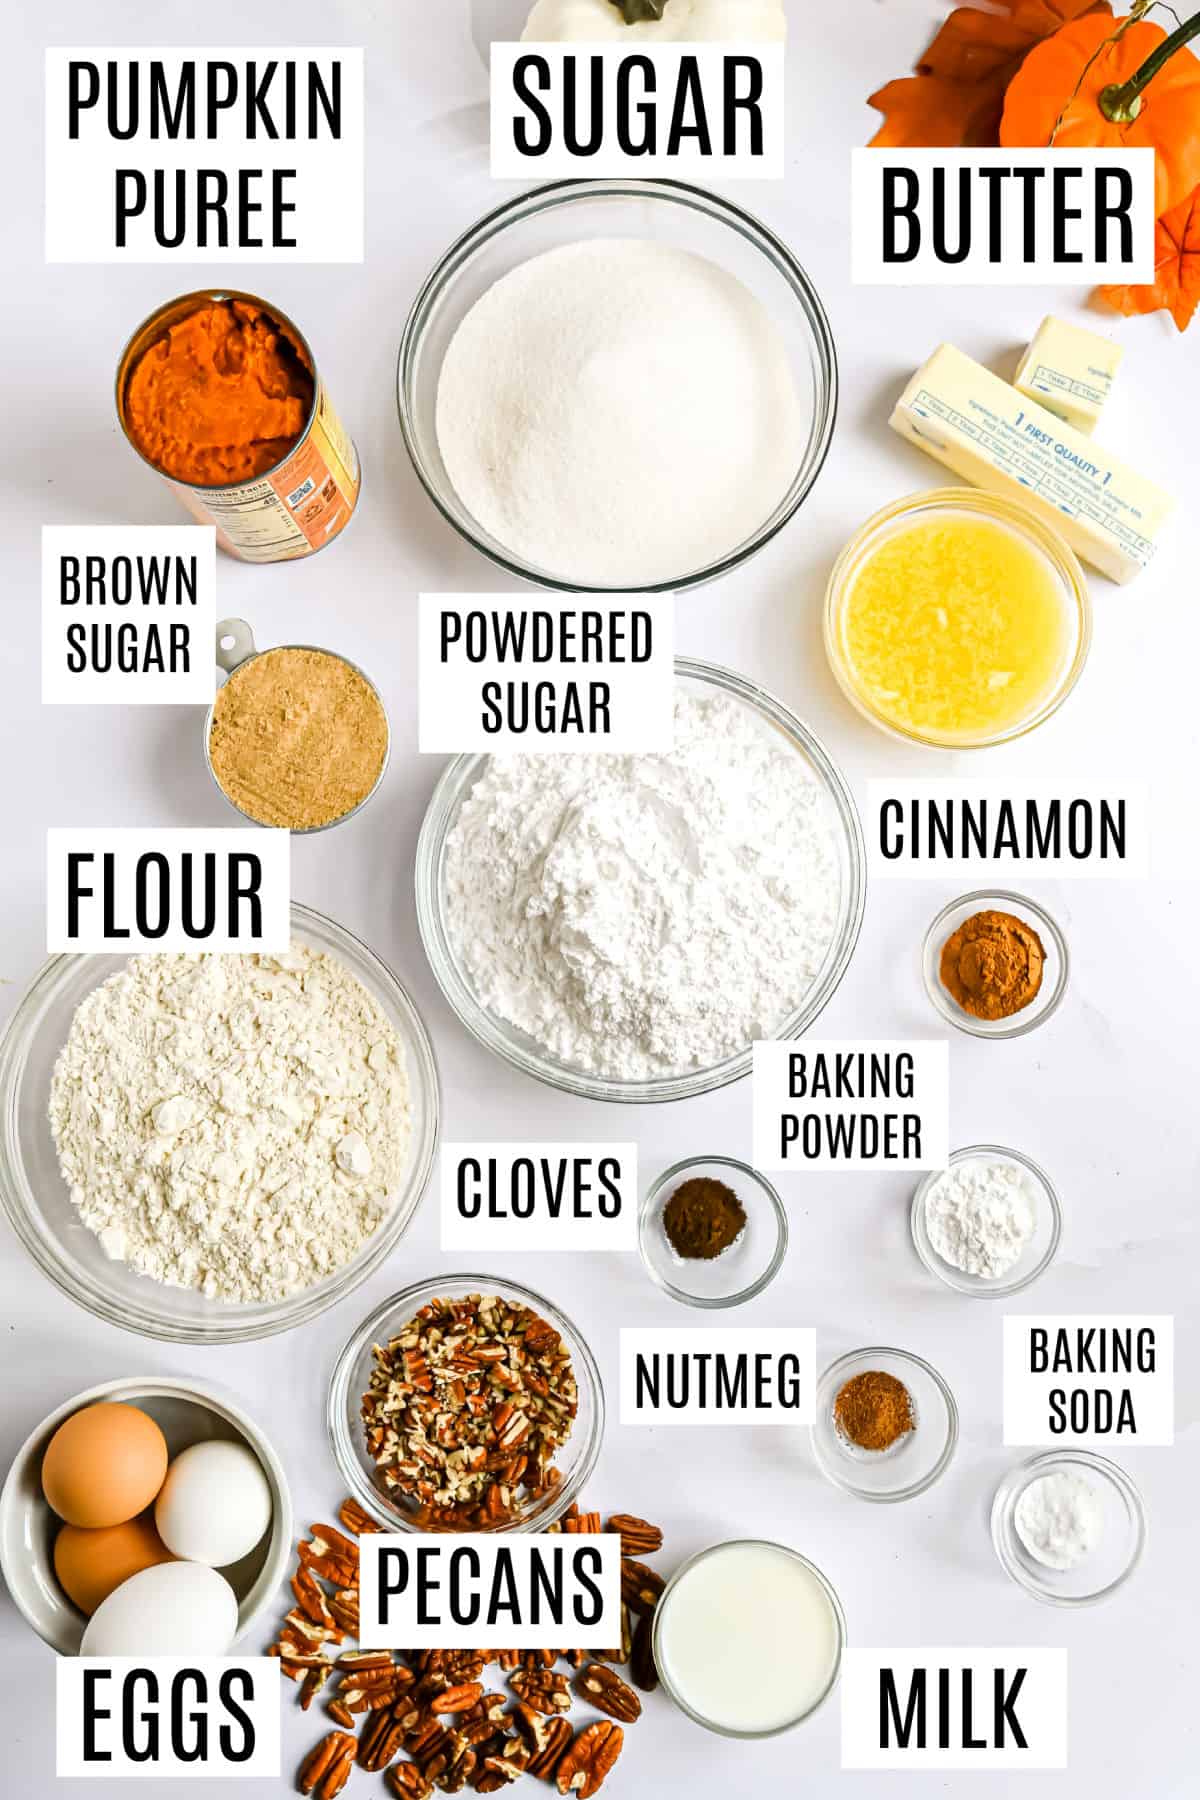 Ingredients to make pumpkin bars.